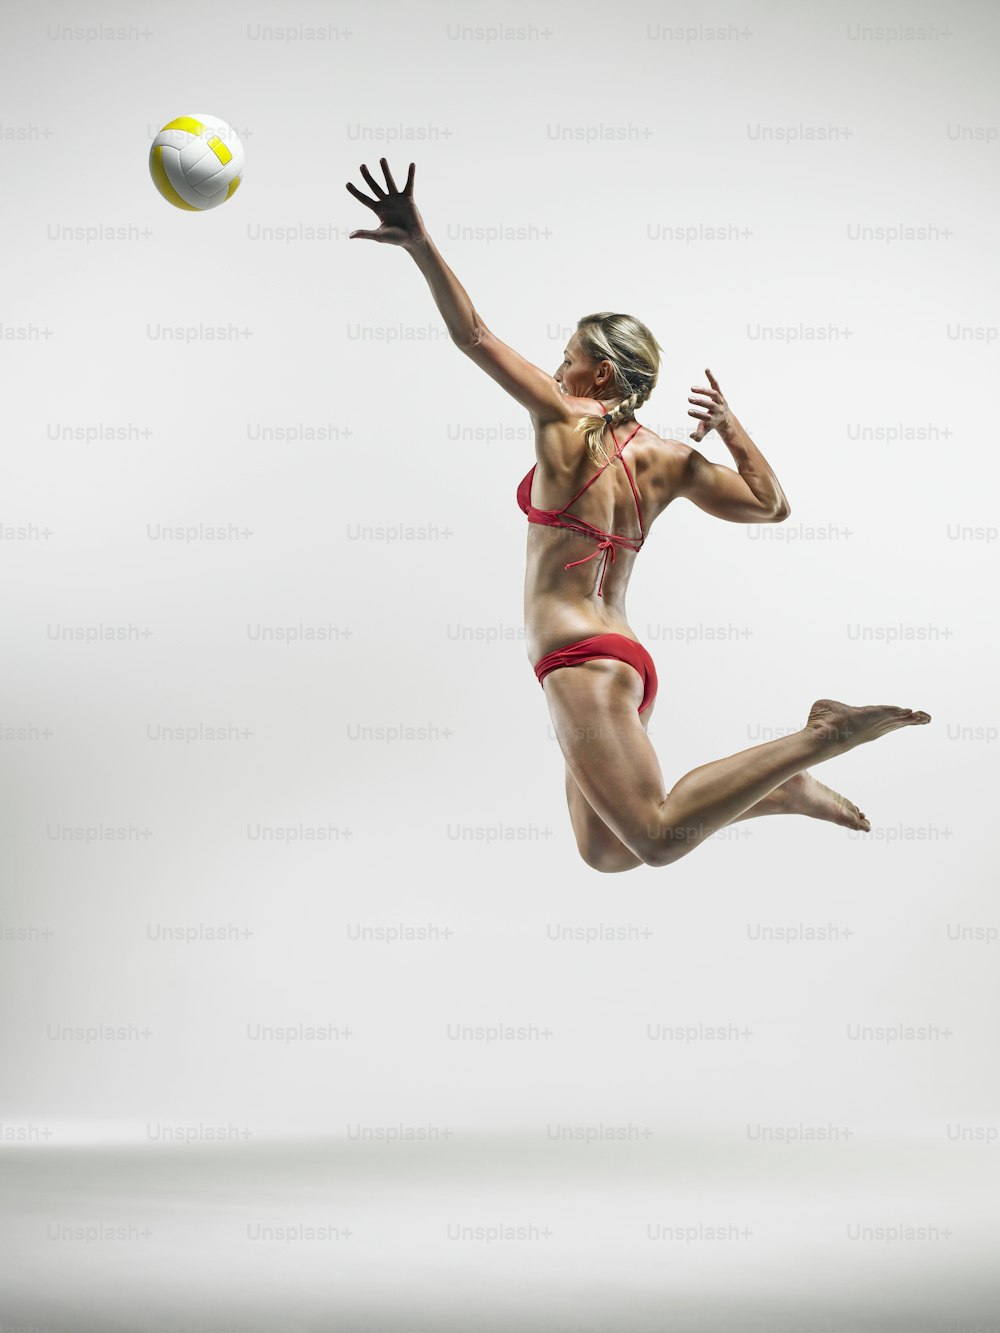 a woman in a bikini jumps to catch a ball